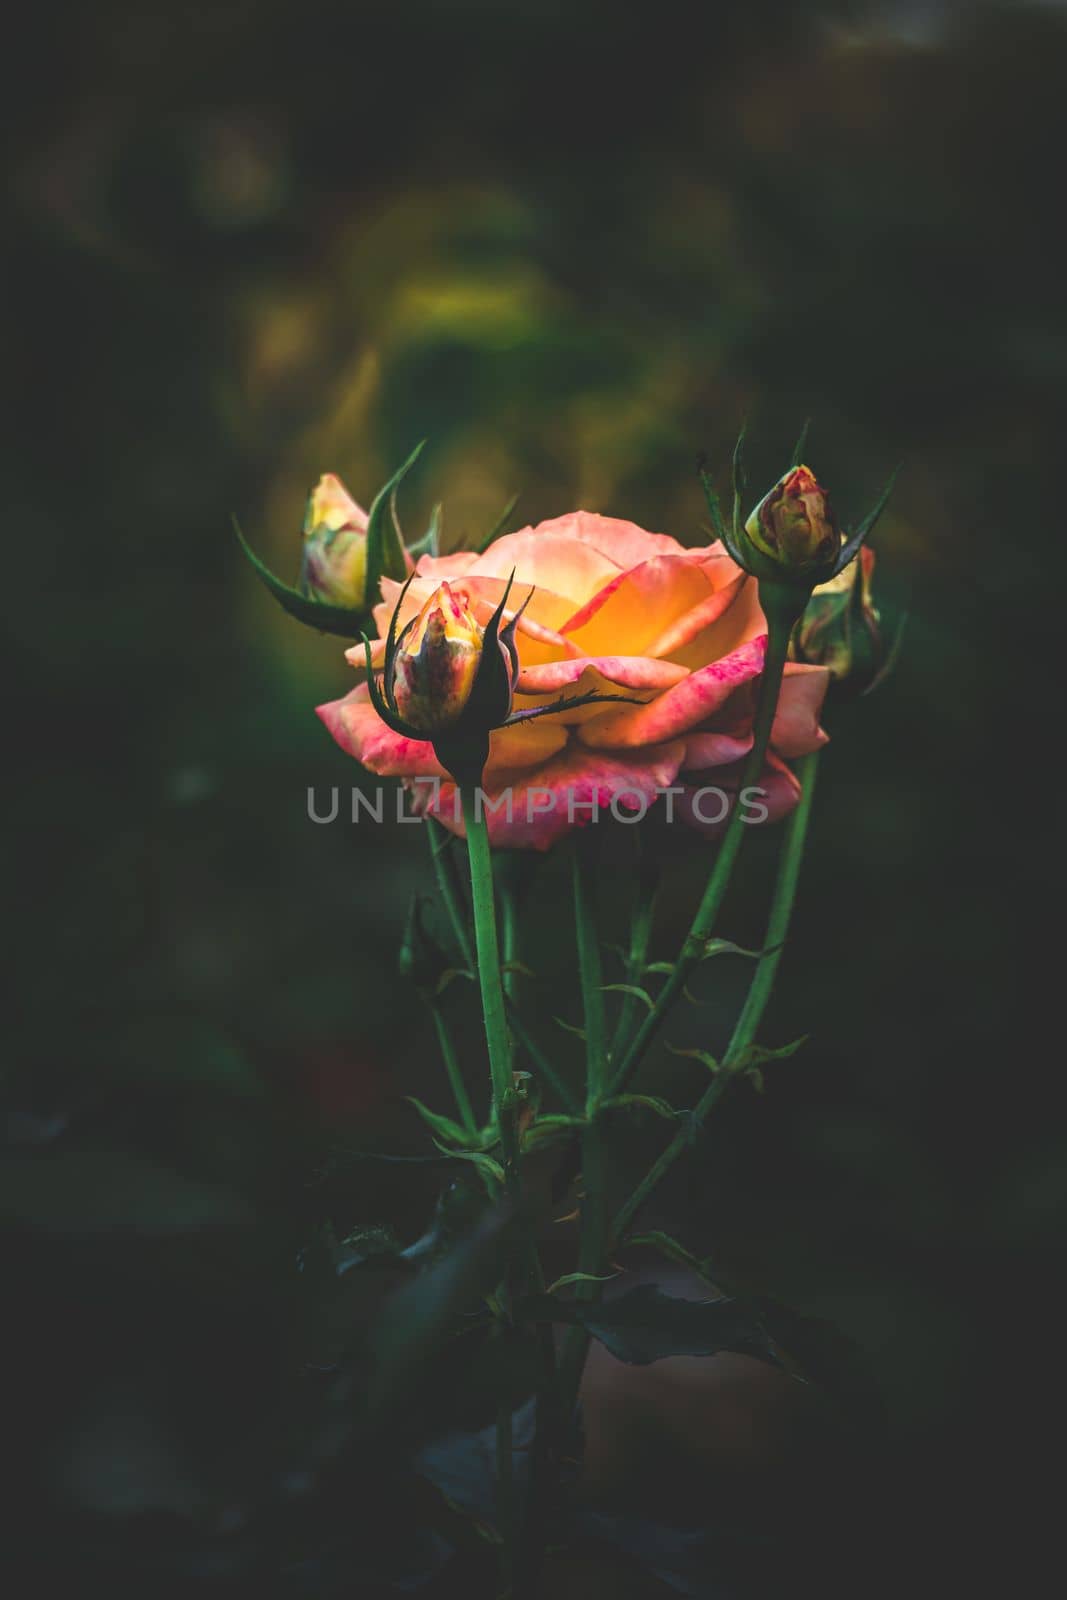 Garden rose, Yellow rose, Rose in the garden, bangladeshi garden rose by abdulkayum97